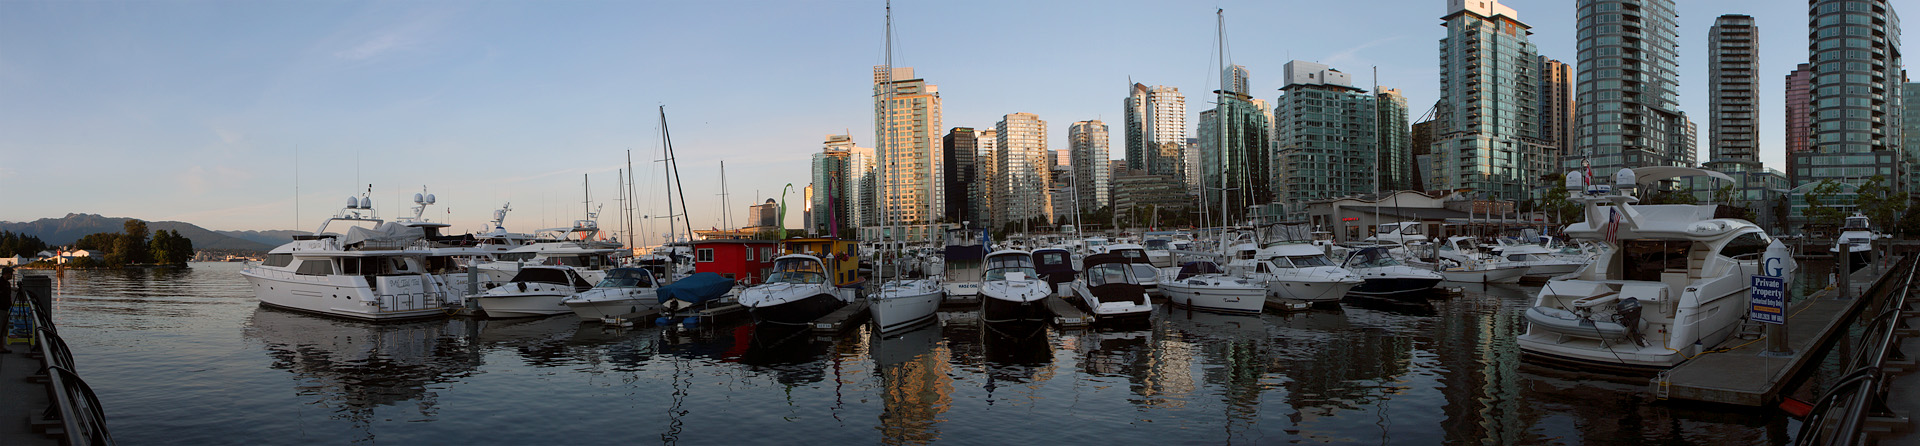 Vancouver Marina, British Columbia, Canada